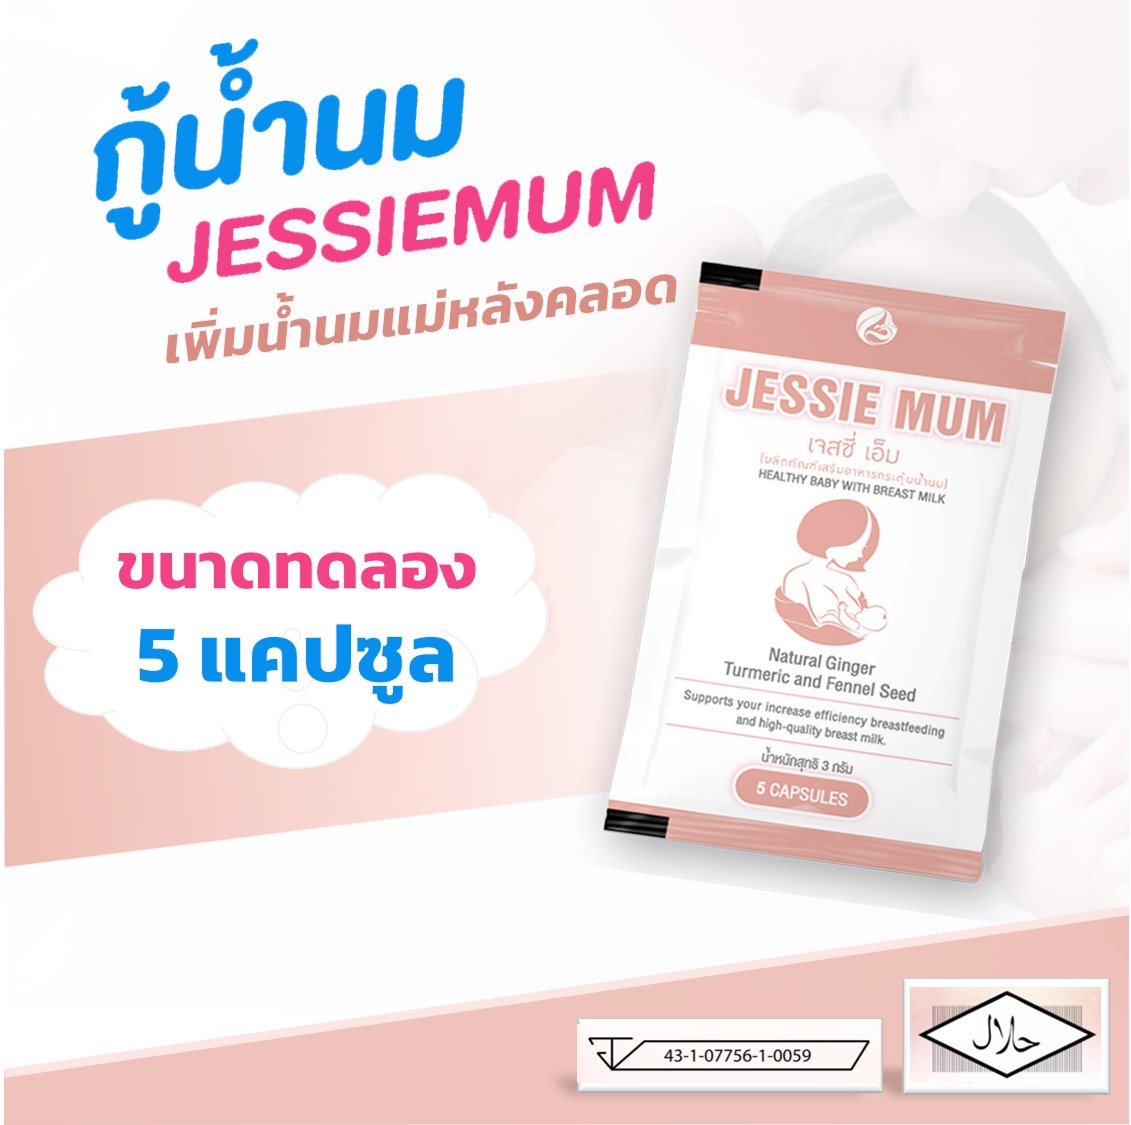 Jessie Mum Jessiemum เจสซี่มัม [ชุดทดลอง 1 ซอง] อาหารเสริมเพิ่มน้ำนม สมุนไพรเพิ่มน้ำนม อาหารเสริมเร่งน้ำนม อาหารเสริมกู้น้ำนม หลังคลอด อยู่ไฟ